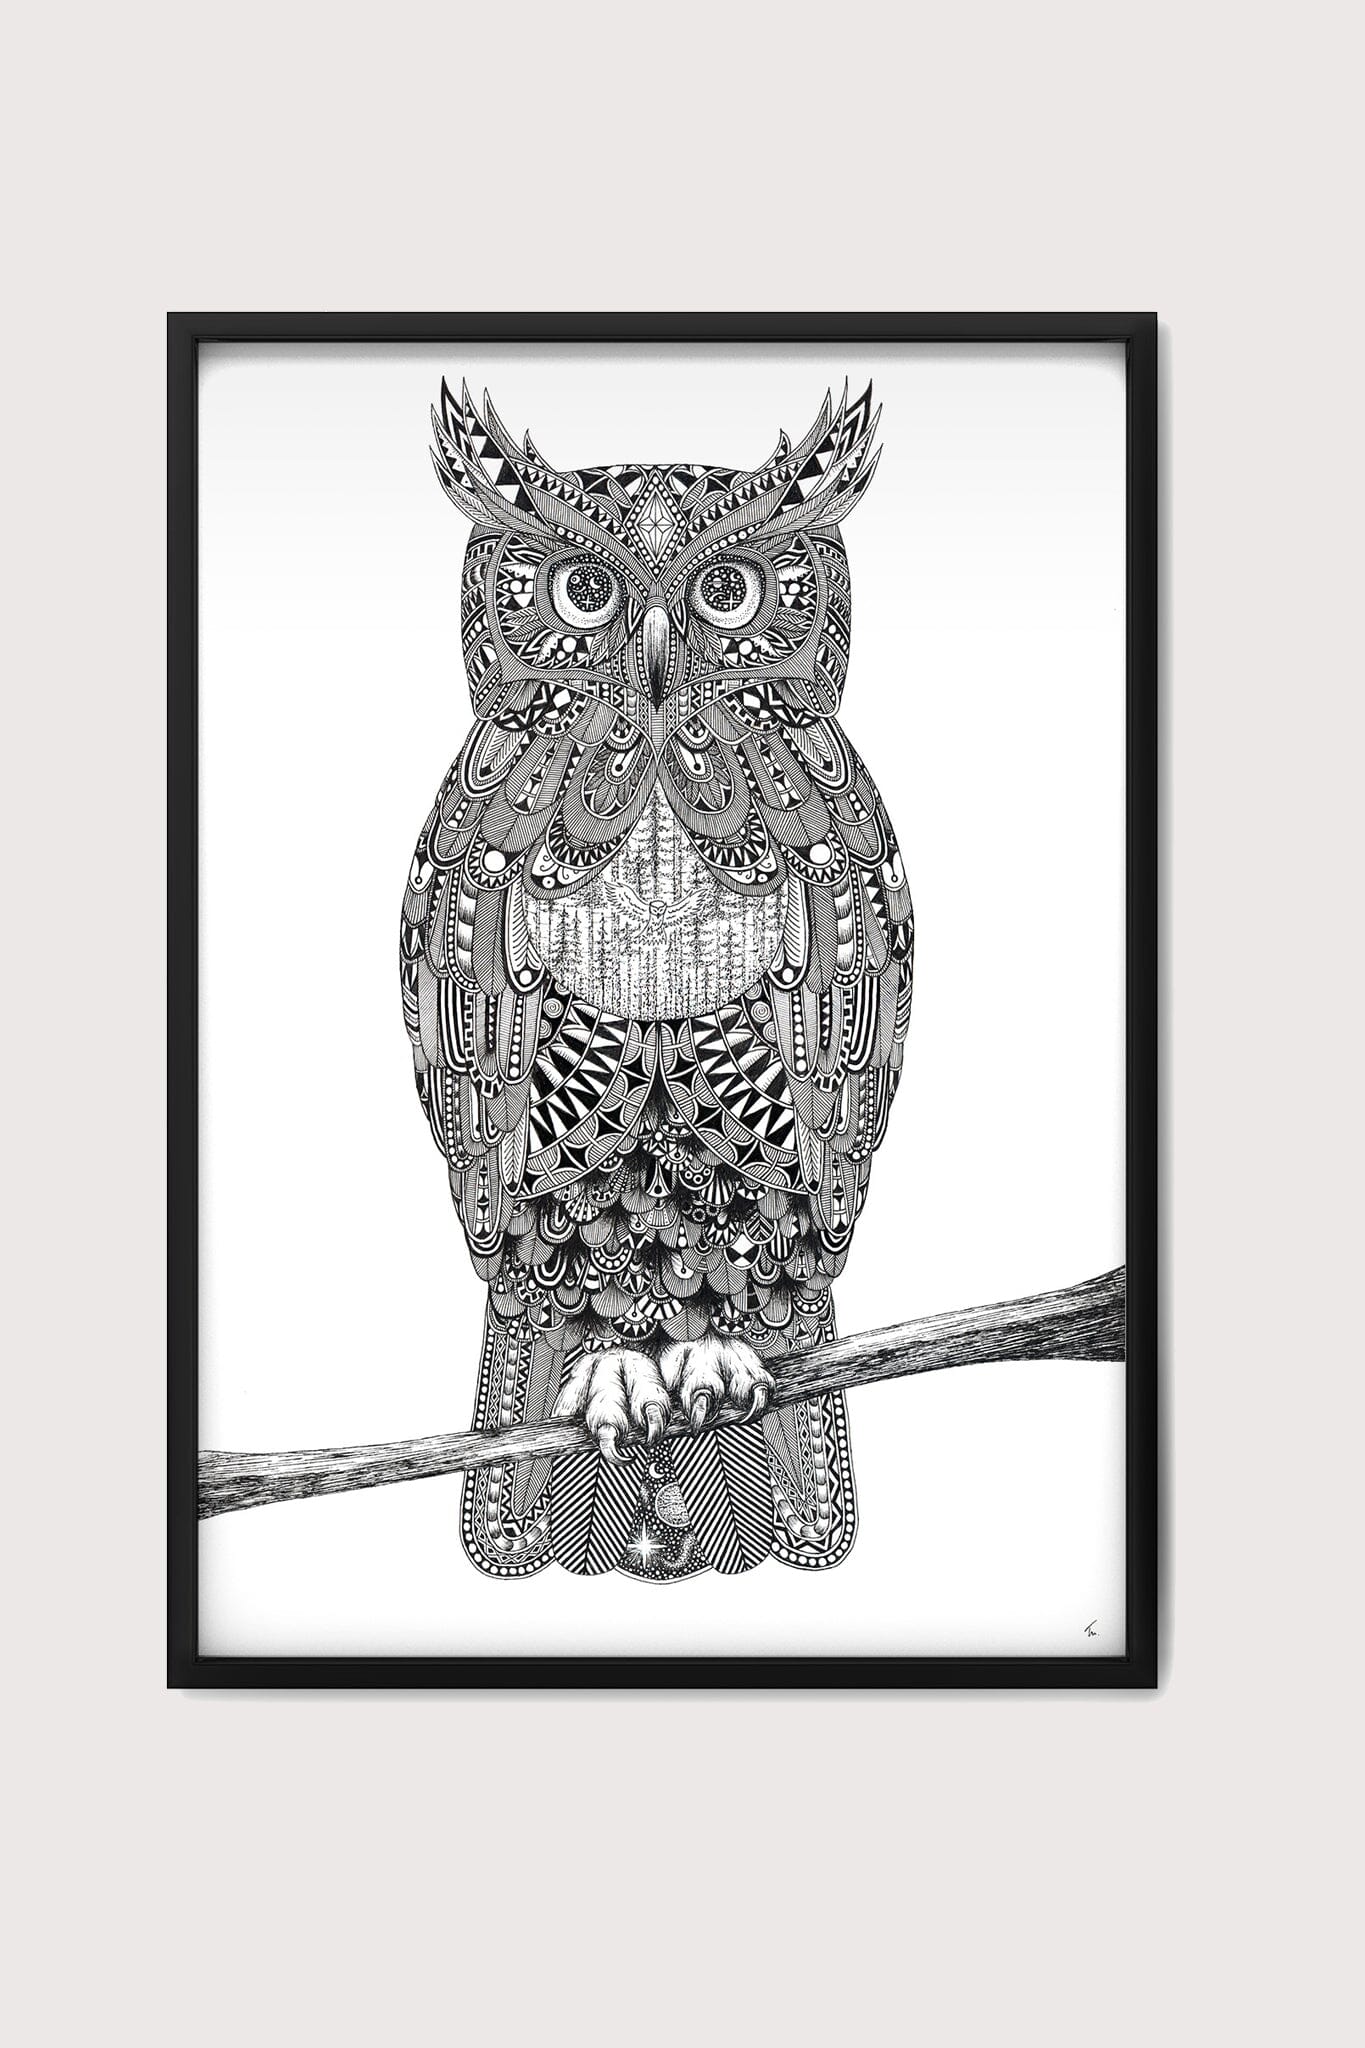 Night Owl Fine Art Print